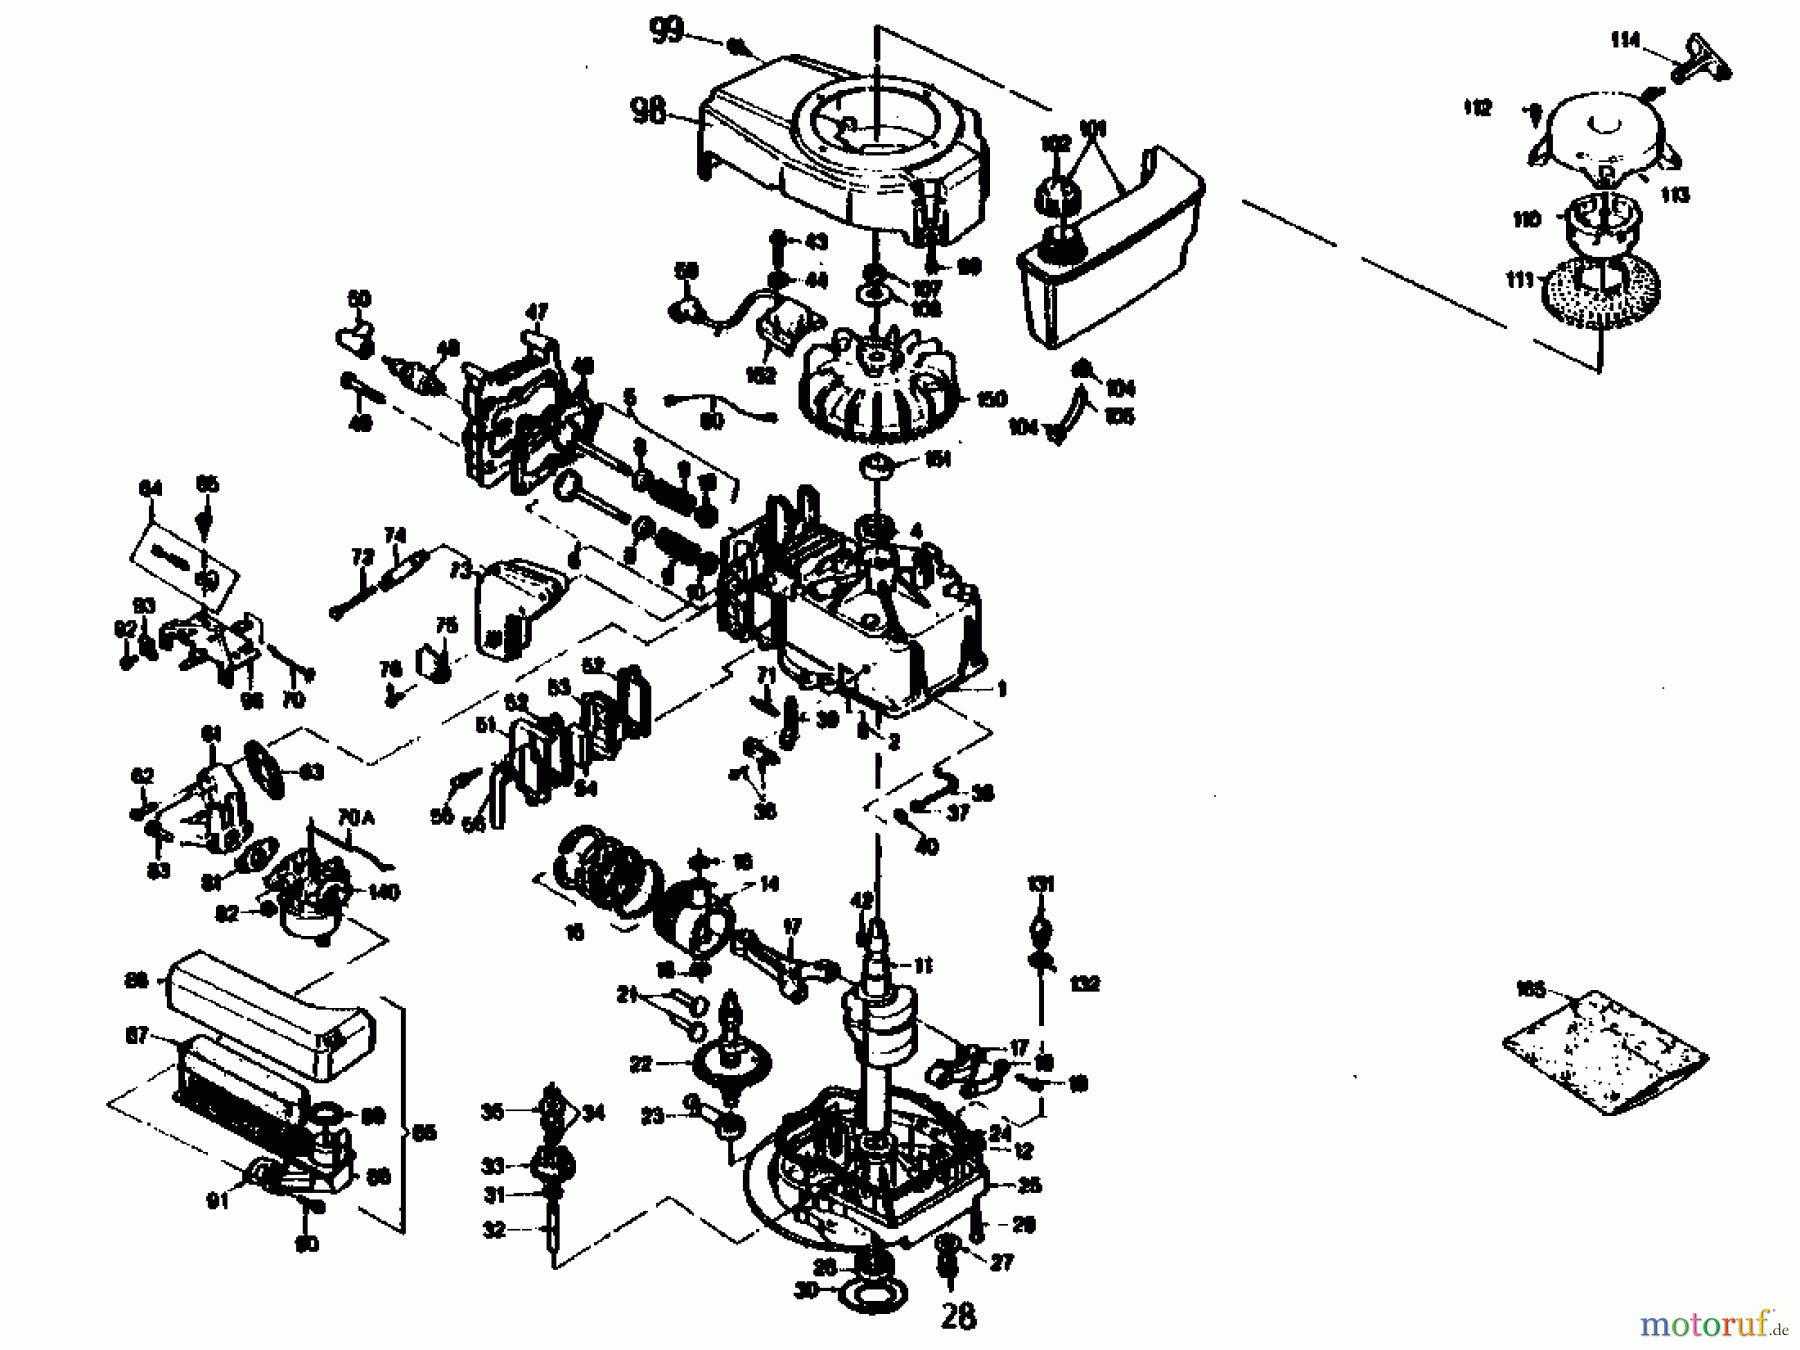  Gutbrod Motormäher mit Antrieb HB 47 R 02847.01  (1989) Kurbelgehäuse, Zylinder